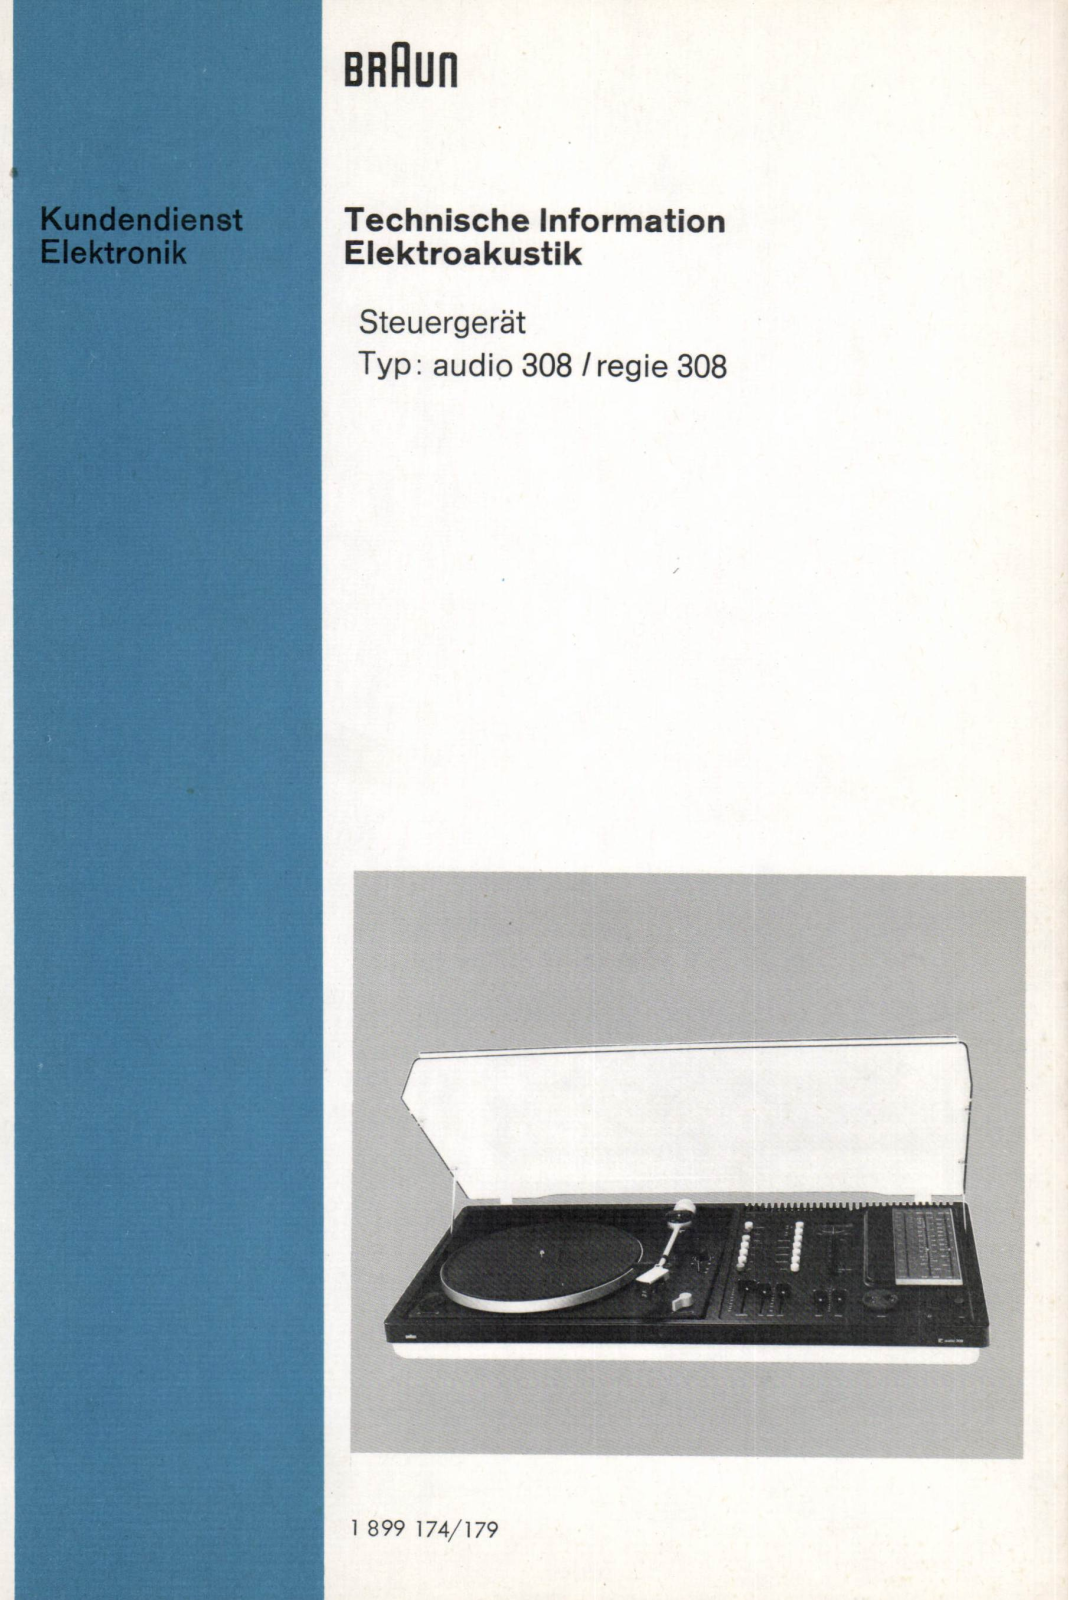 Braun audio 308, regie 308 User Manual